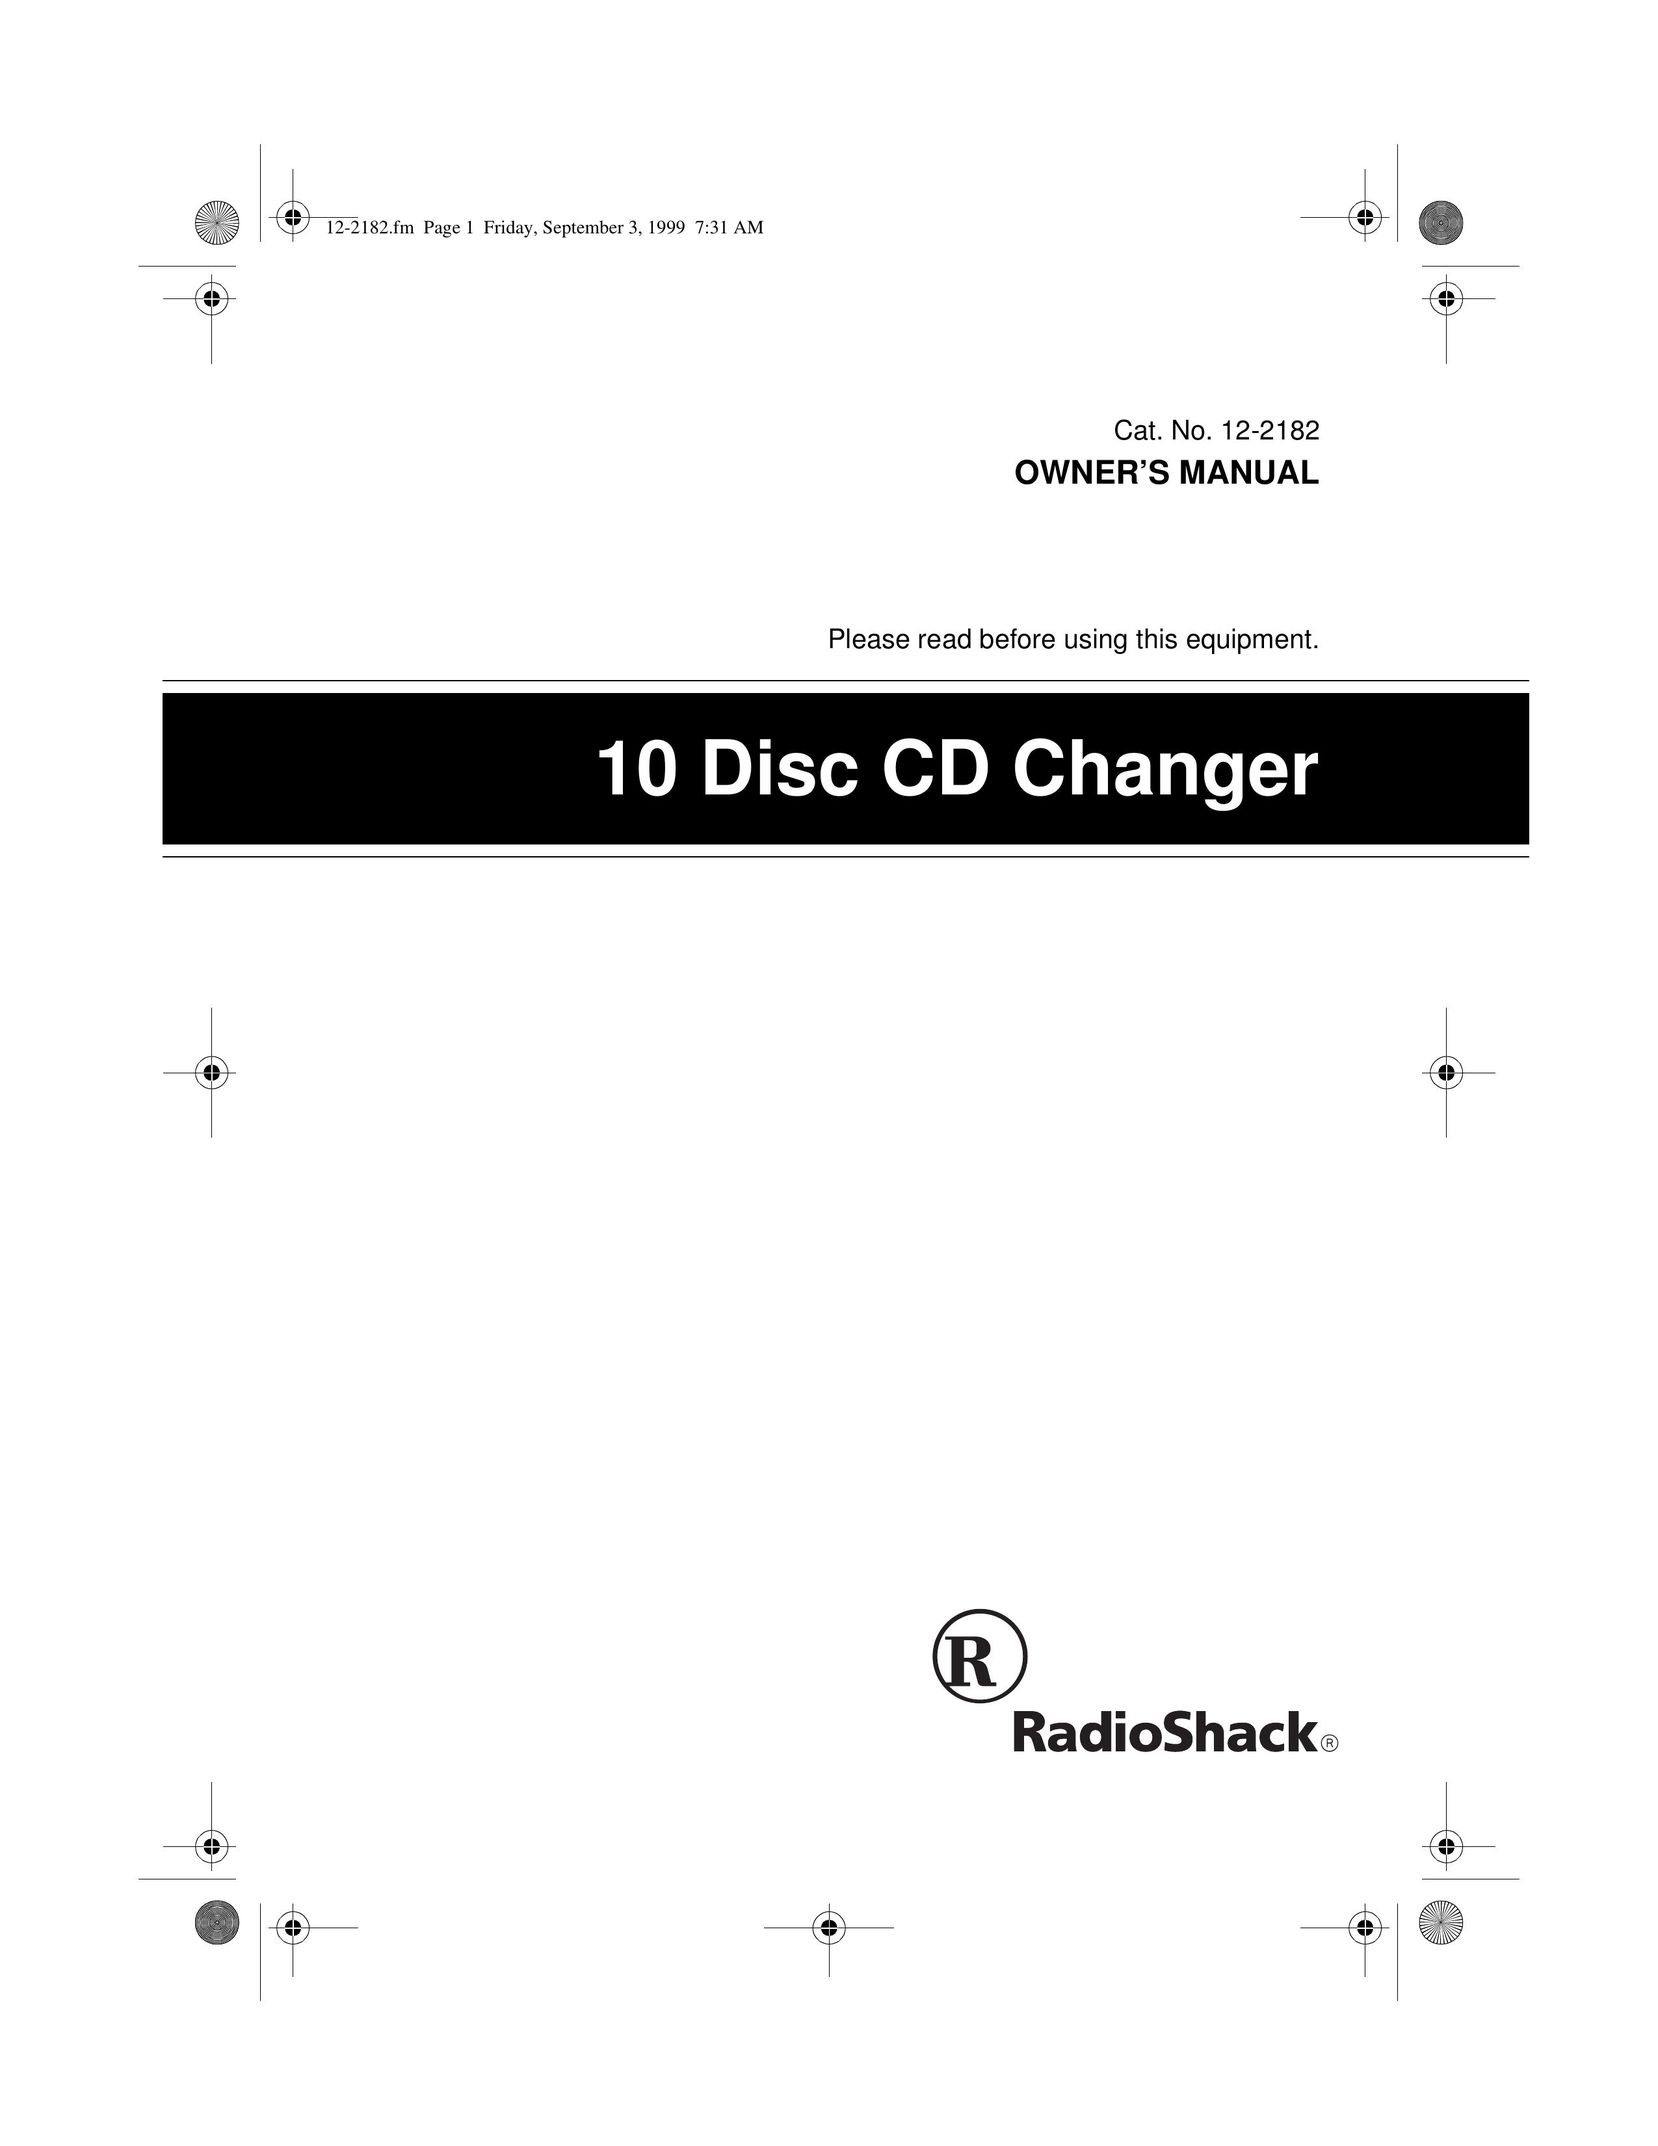 Radio Shack 10 Disc CD Changer CD Player User Manual